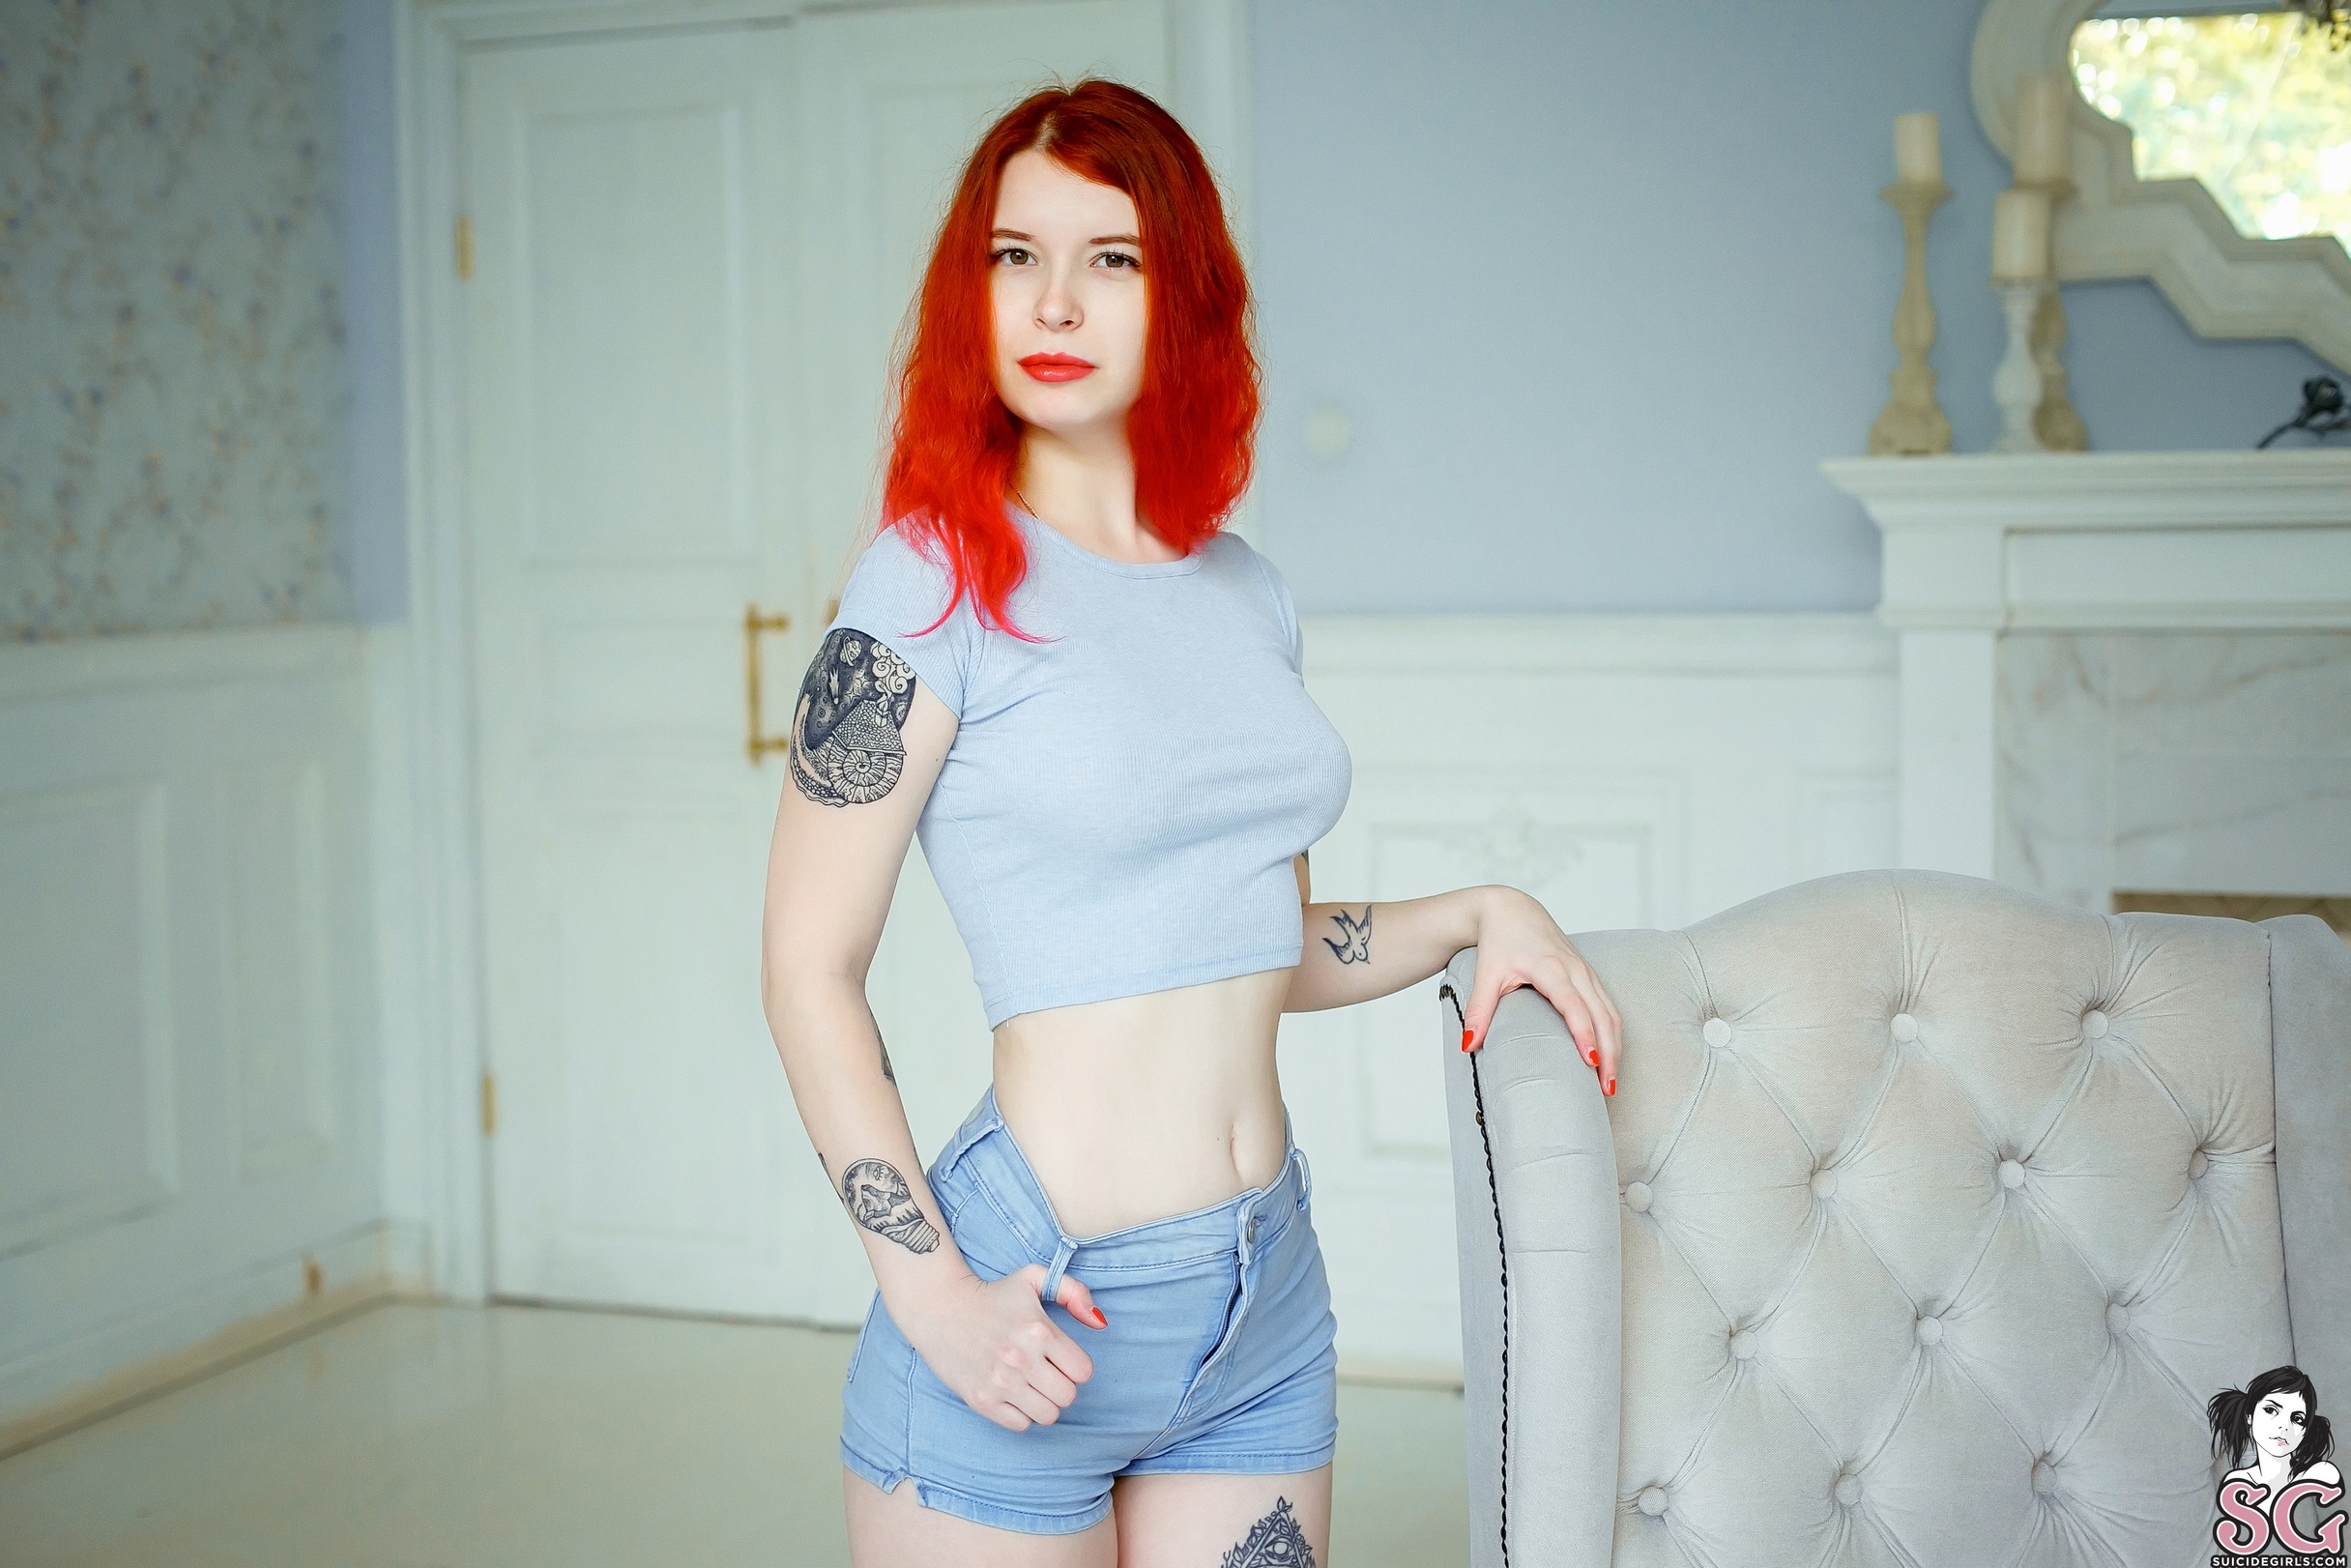 Women Bedroom Redhead Tattoo Long Hair Blouse Jeans Armchairs Door 2432x1622